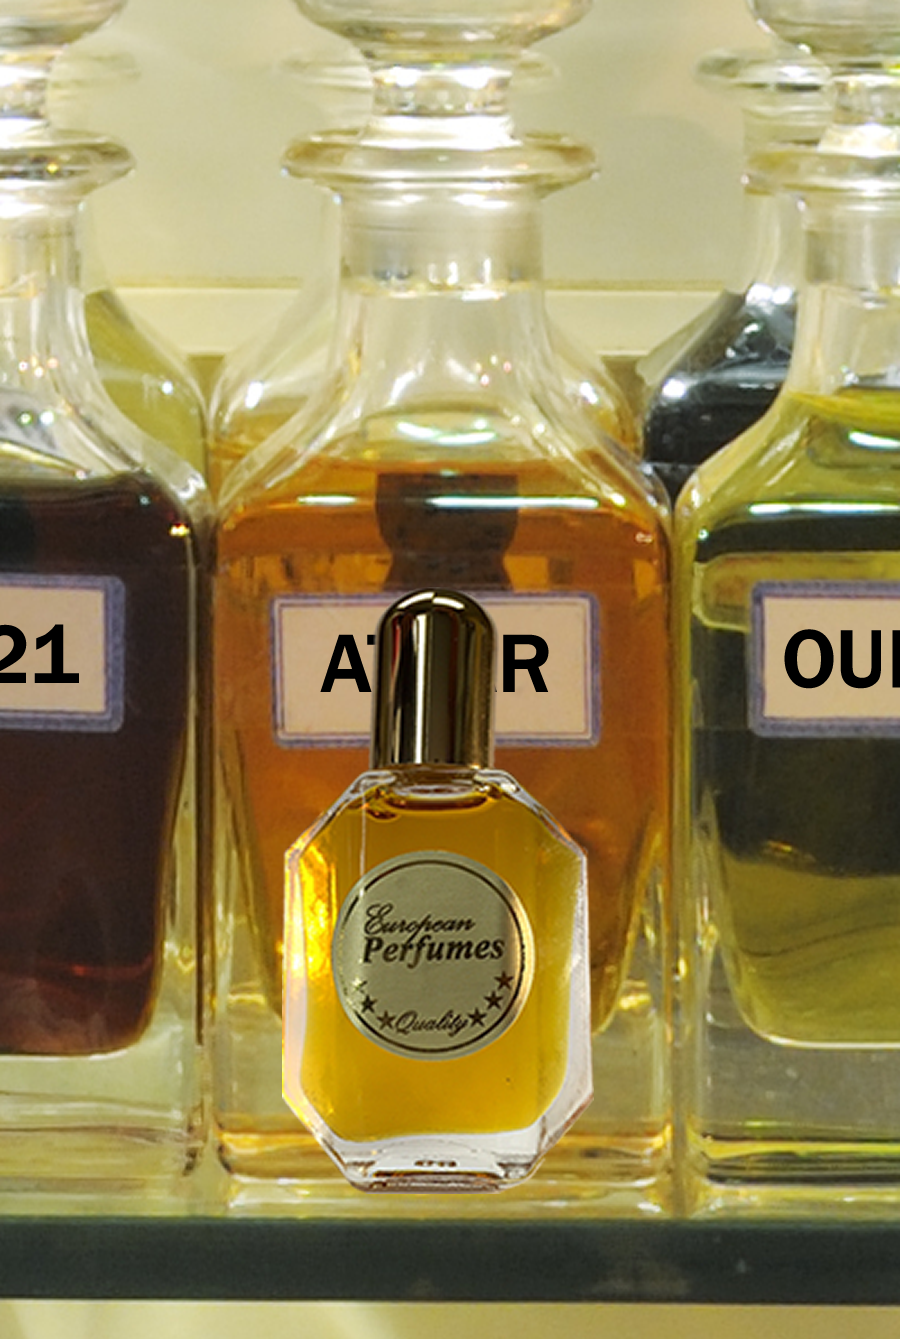 DOLCE Type Perfume Oil Women